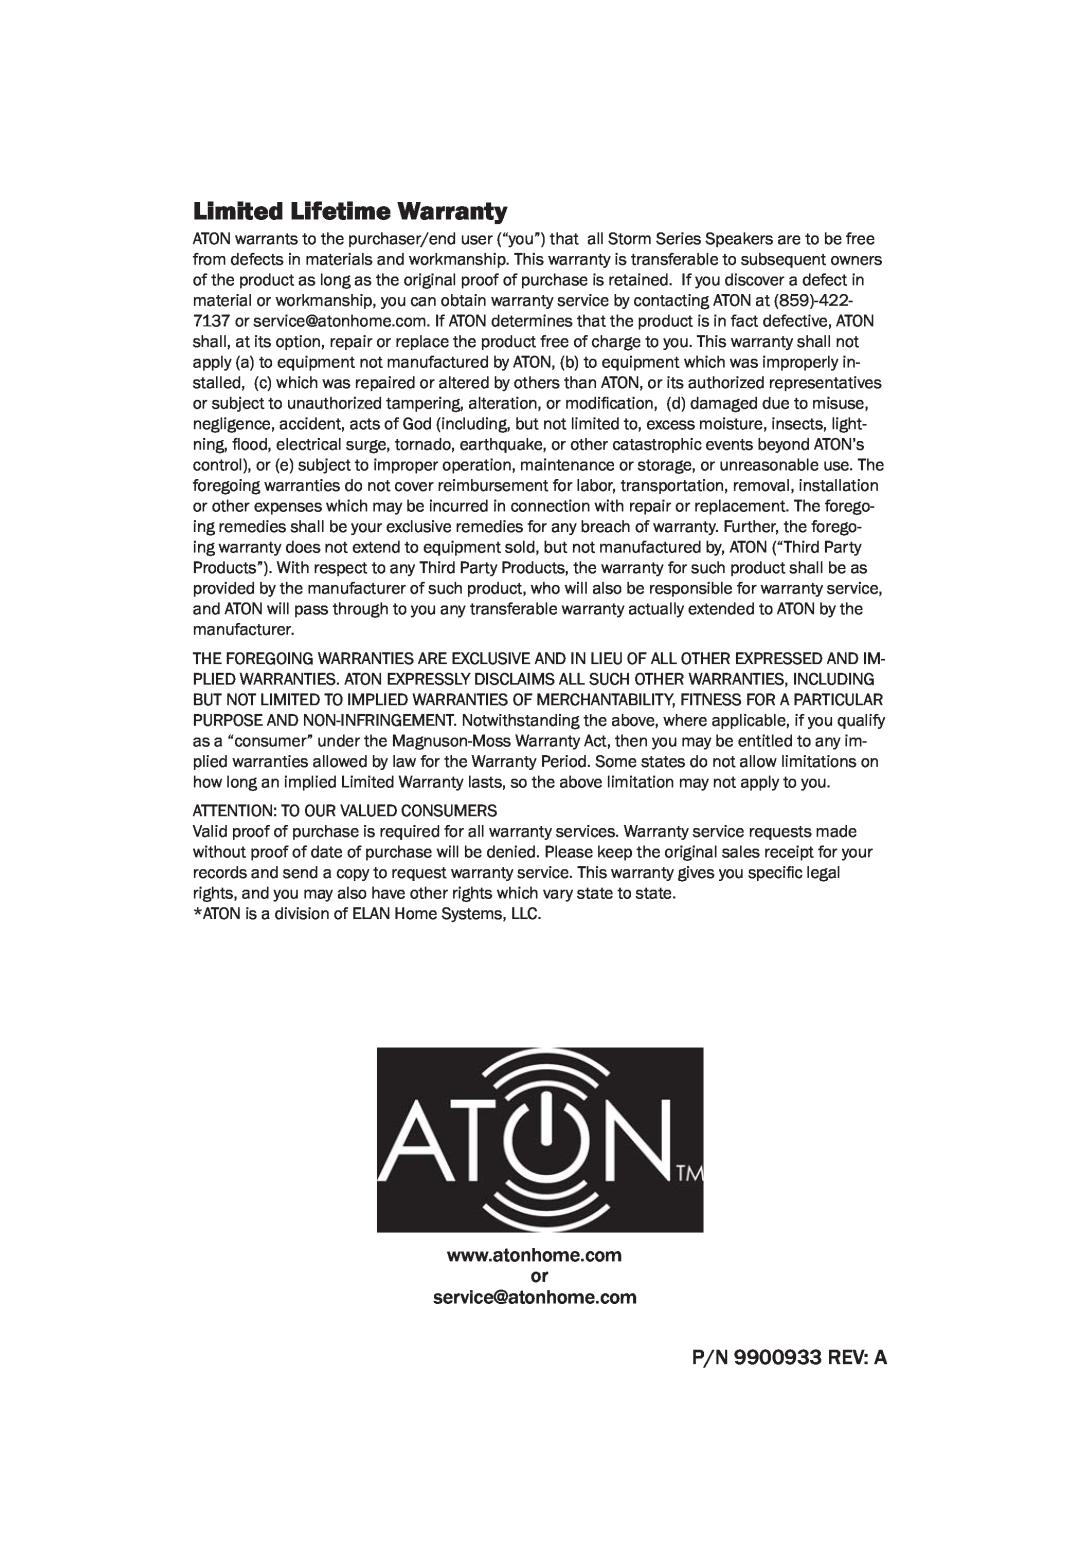 ATON A83C manual P/N 9900933 REV A, Limited Lifetime Warranty 